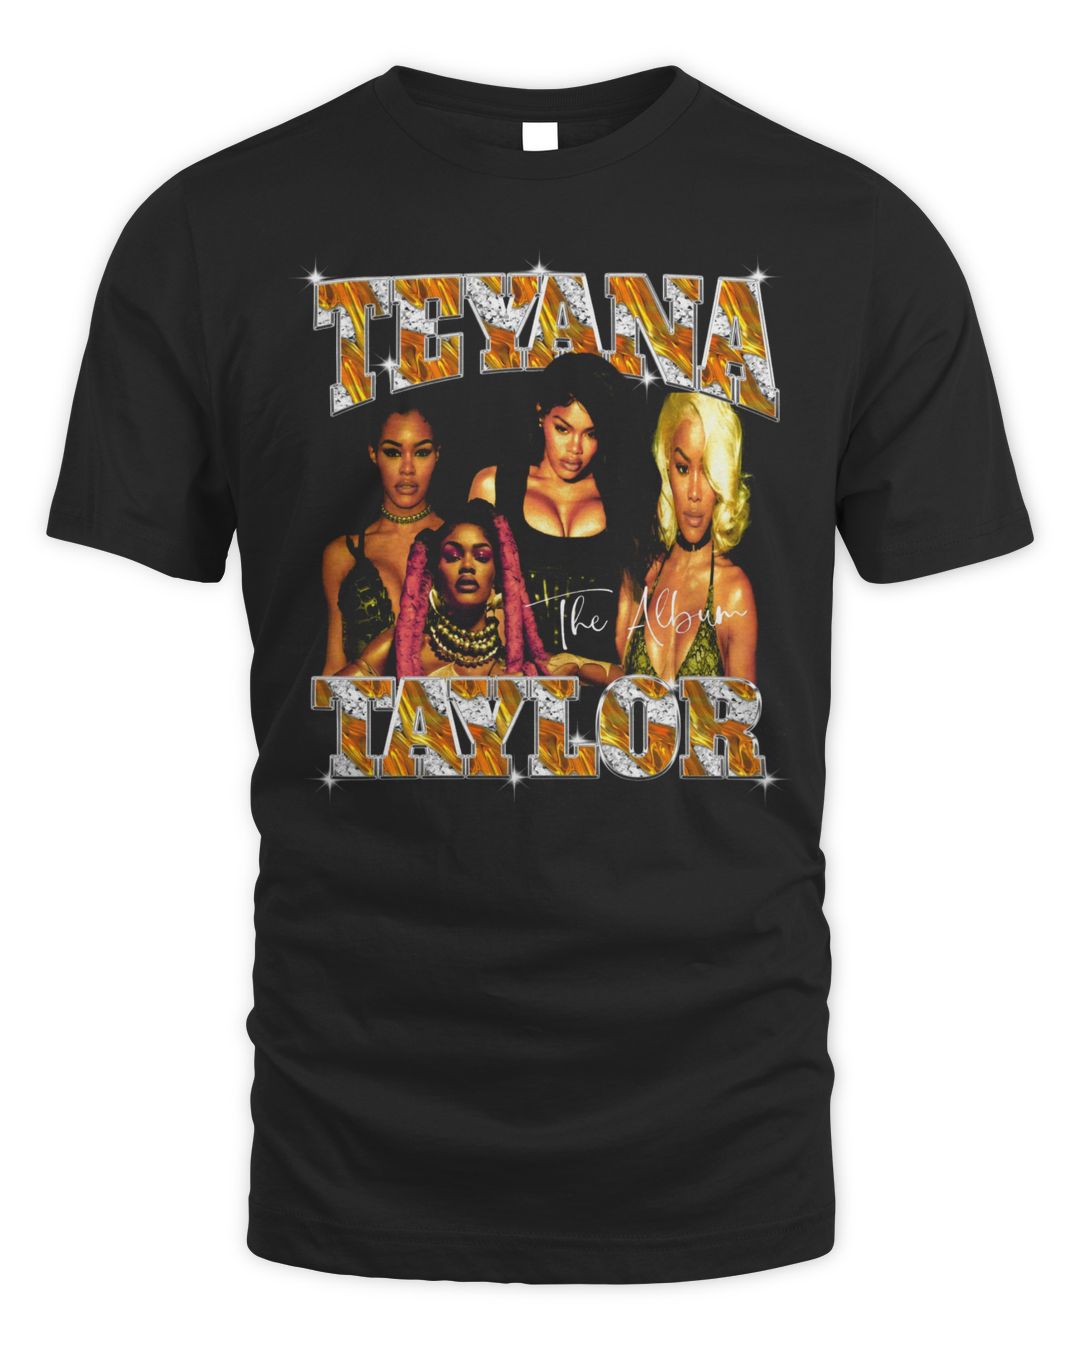 Teyana Taylor Merch the Album Shirt